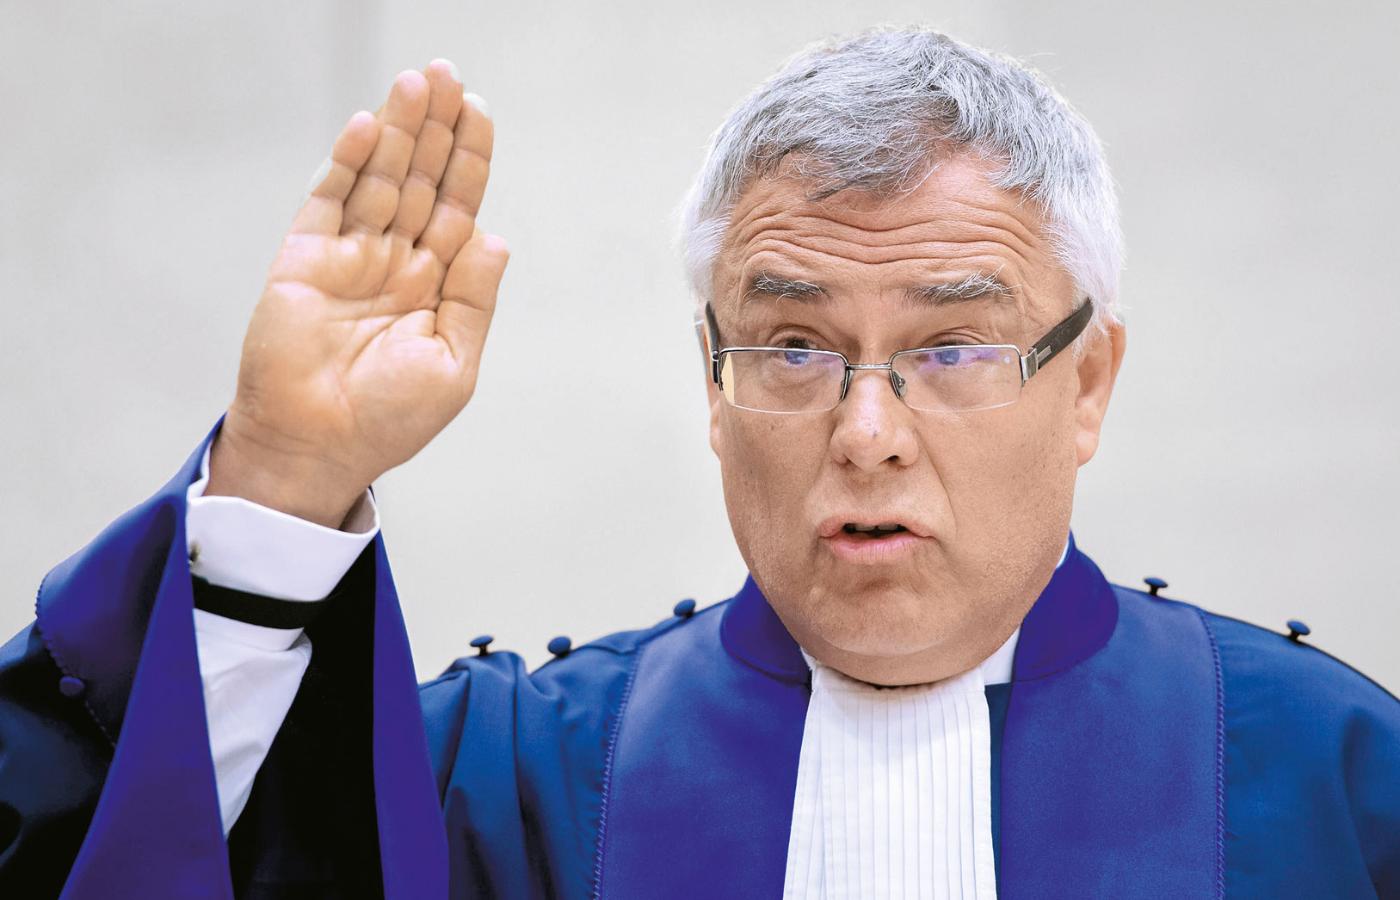 BREAKING: Russia adds ICC president, Hofmanski, to wanted list